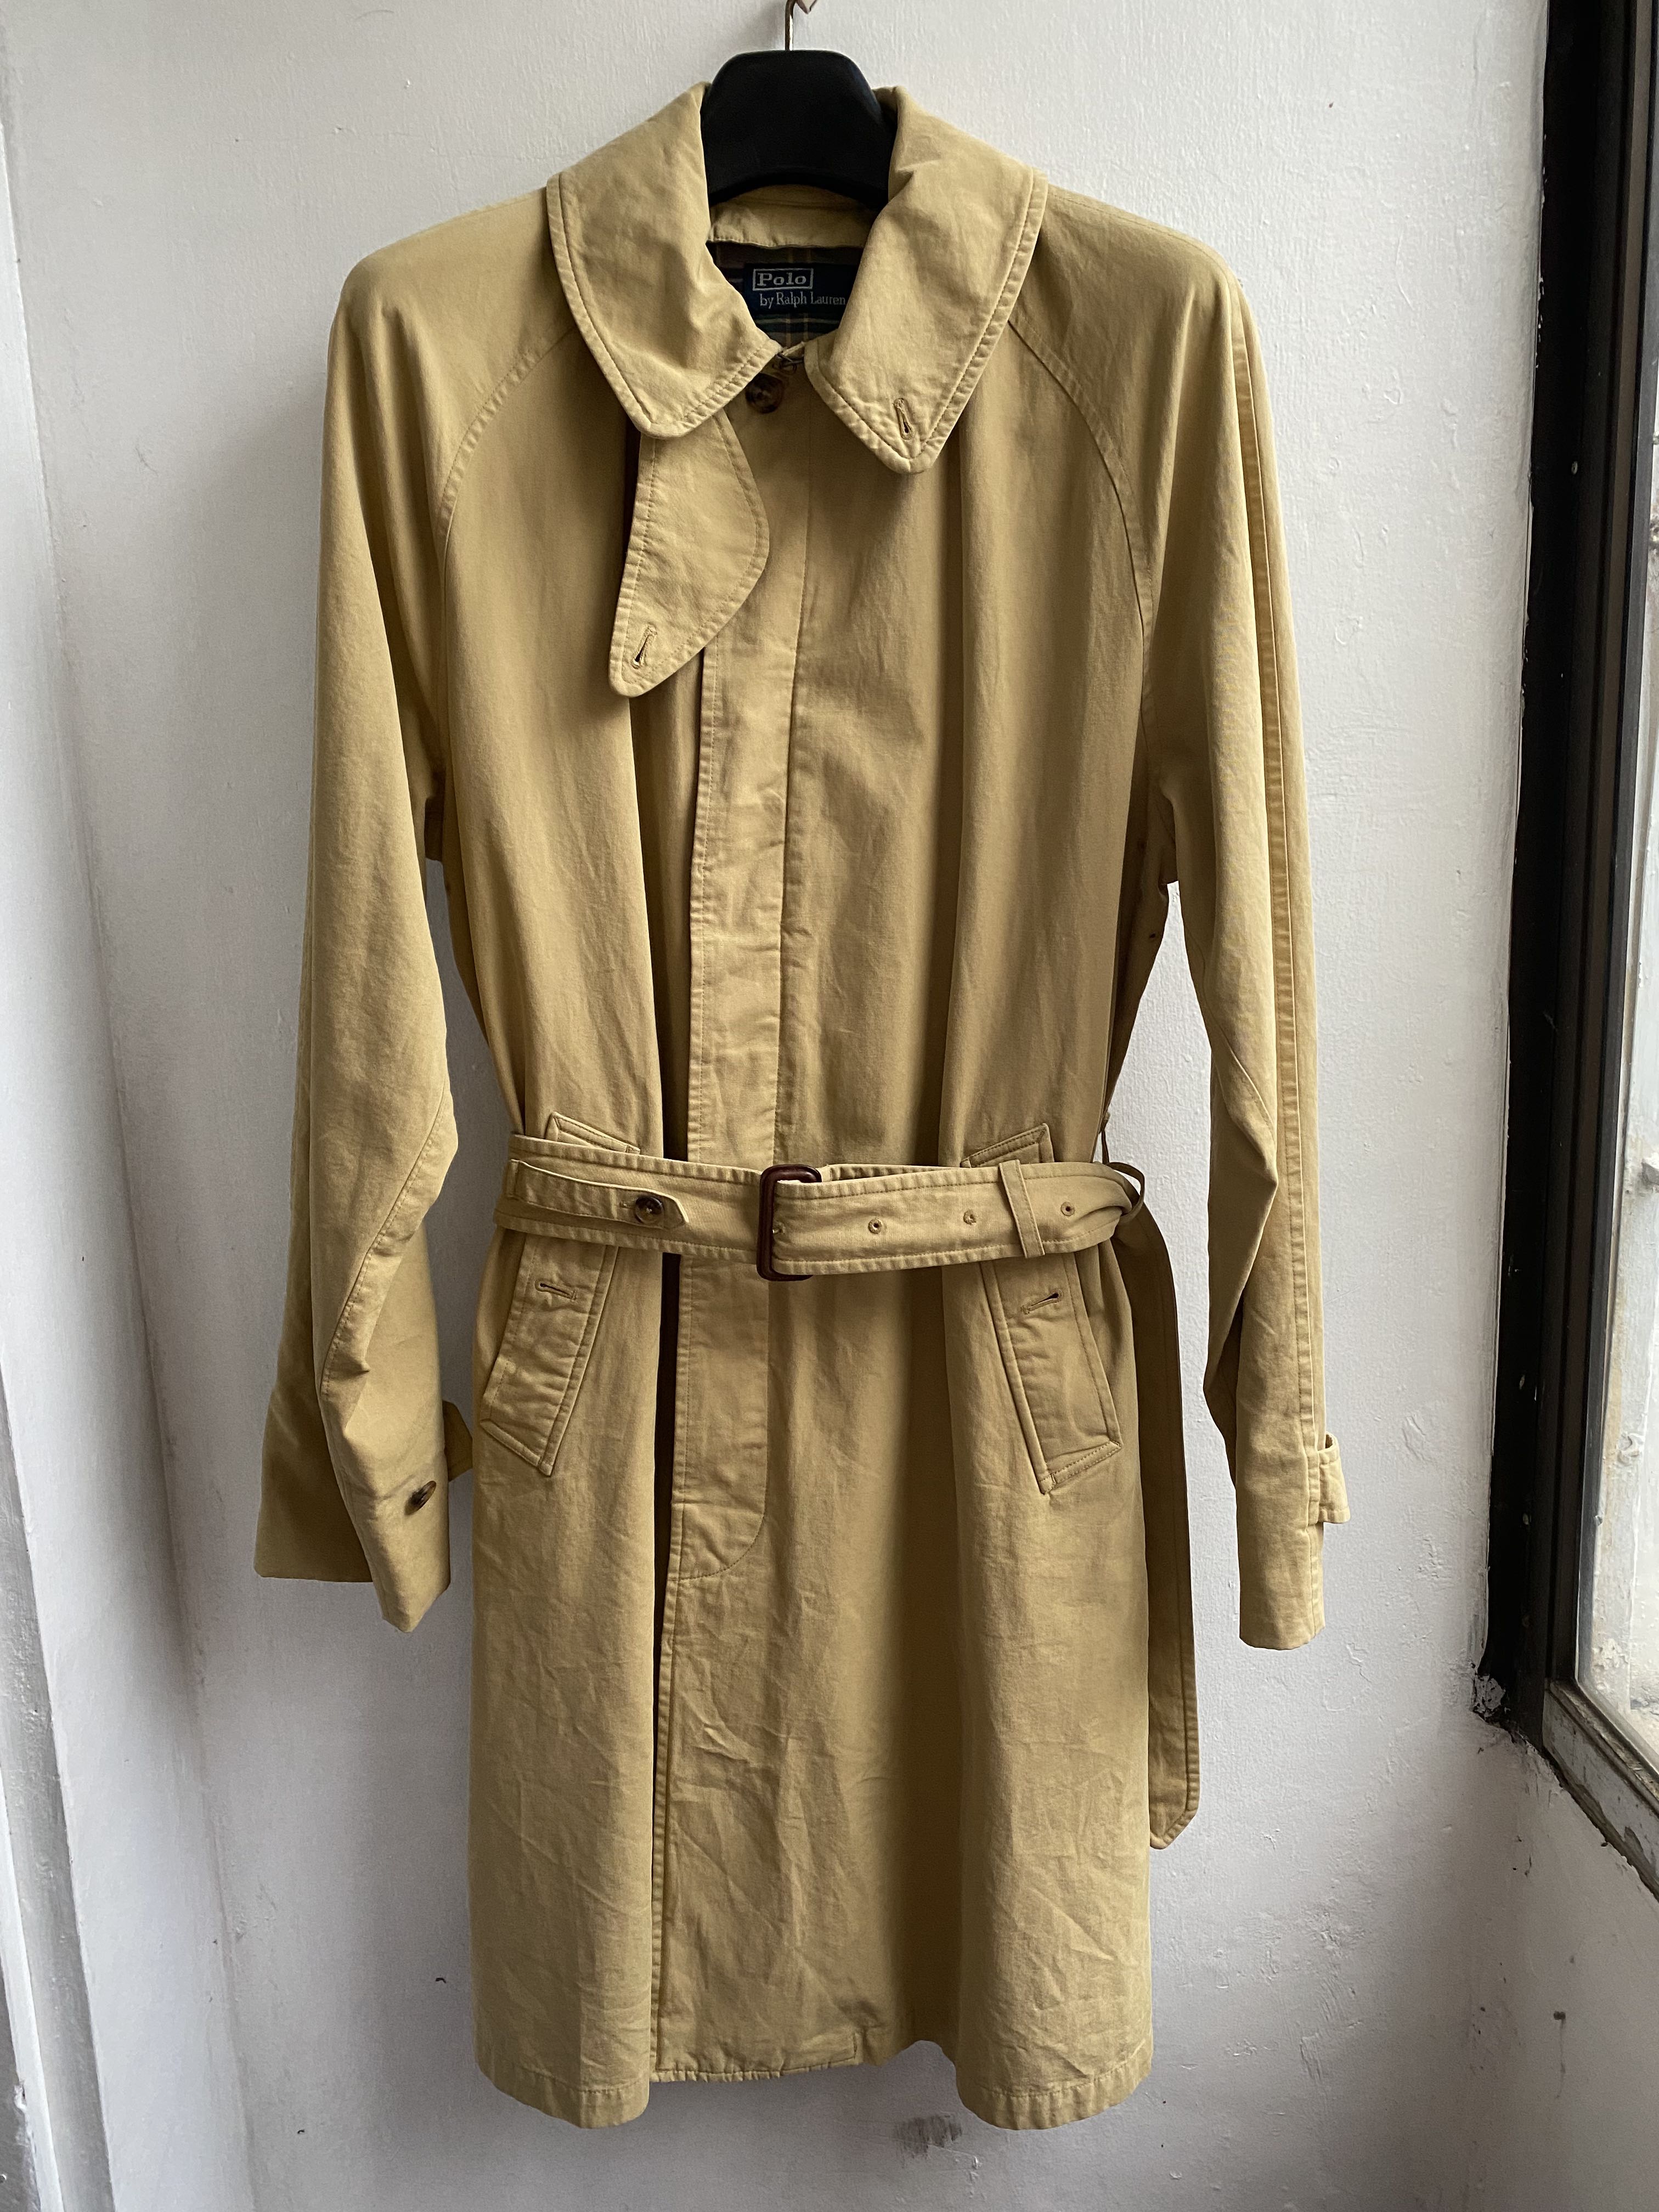 Authentic RALP LAUREN sample trench coat, Men's Fashion, Coats, Jackets ...